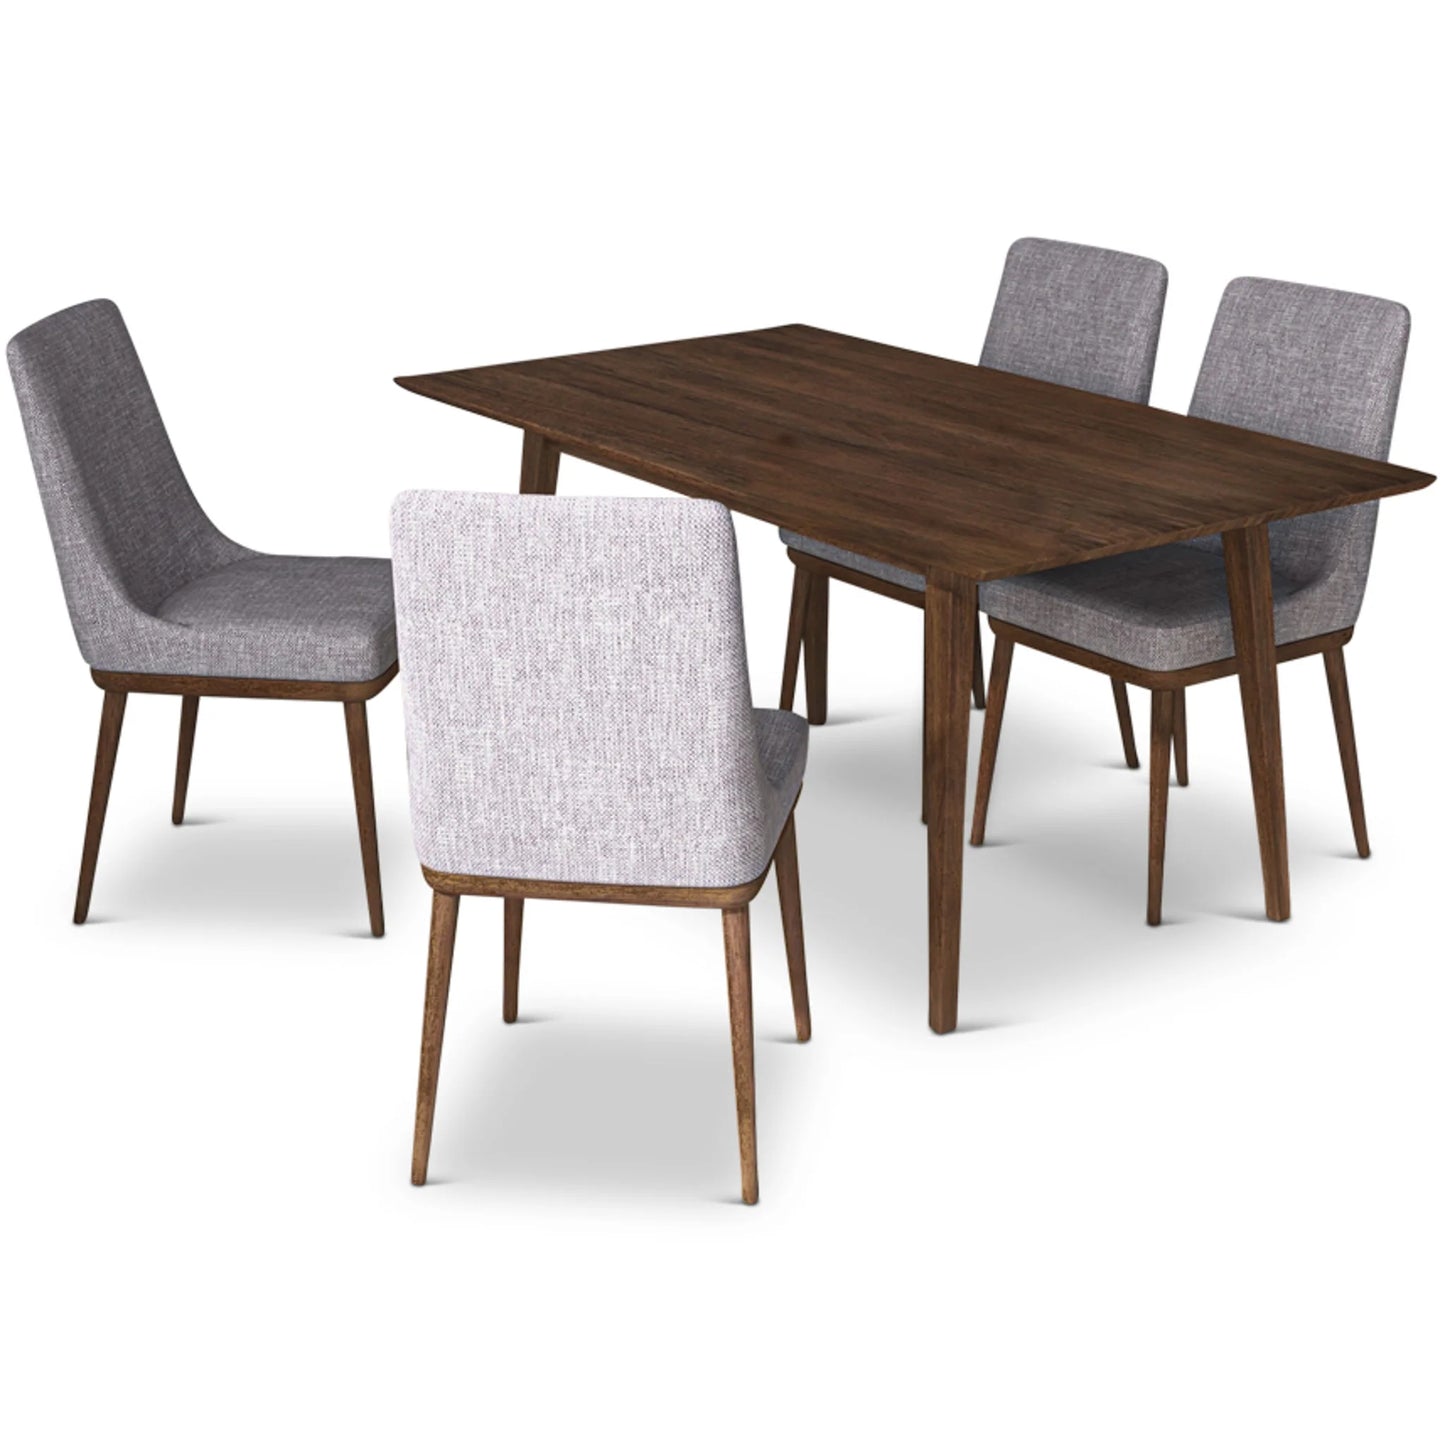 Adira (Large - Walnut) Dining Set with 4 Brighton (Grey) Dining Chairs